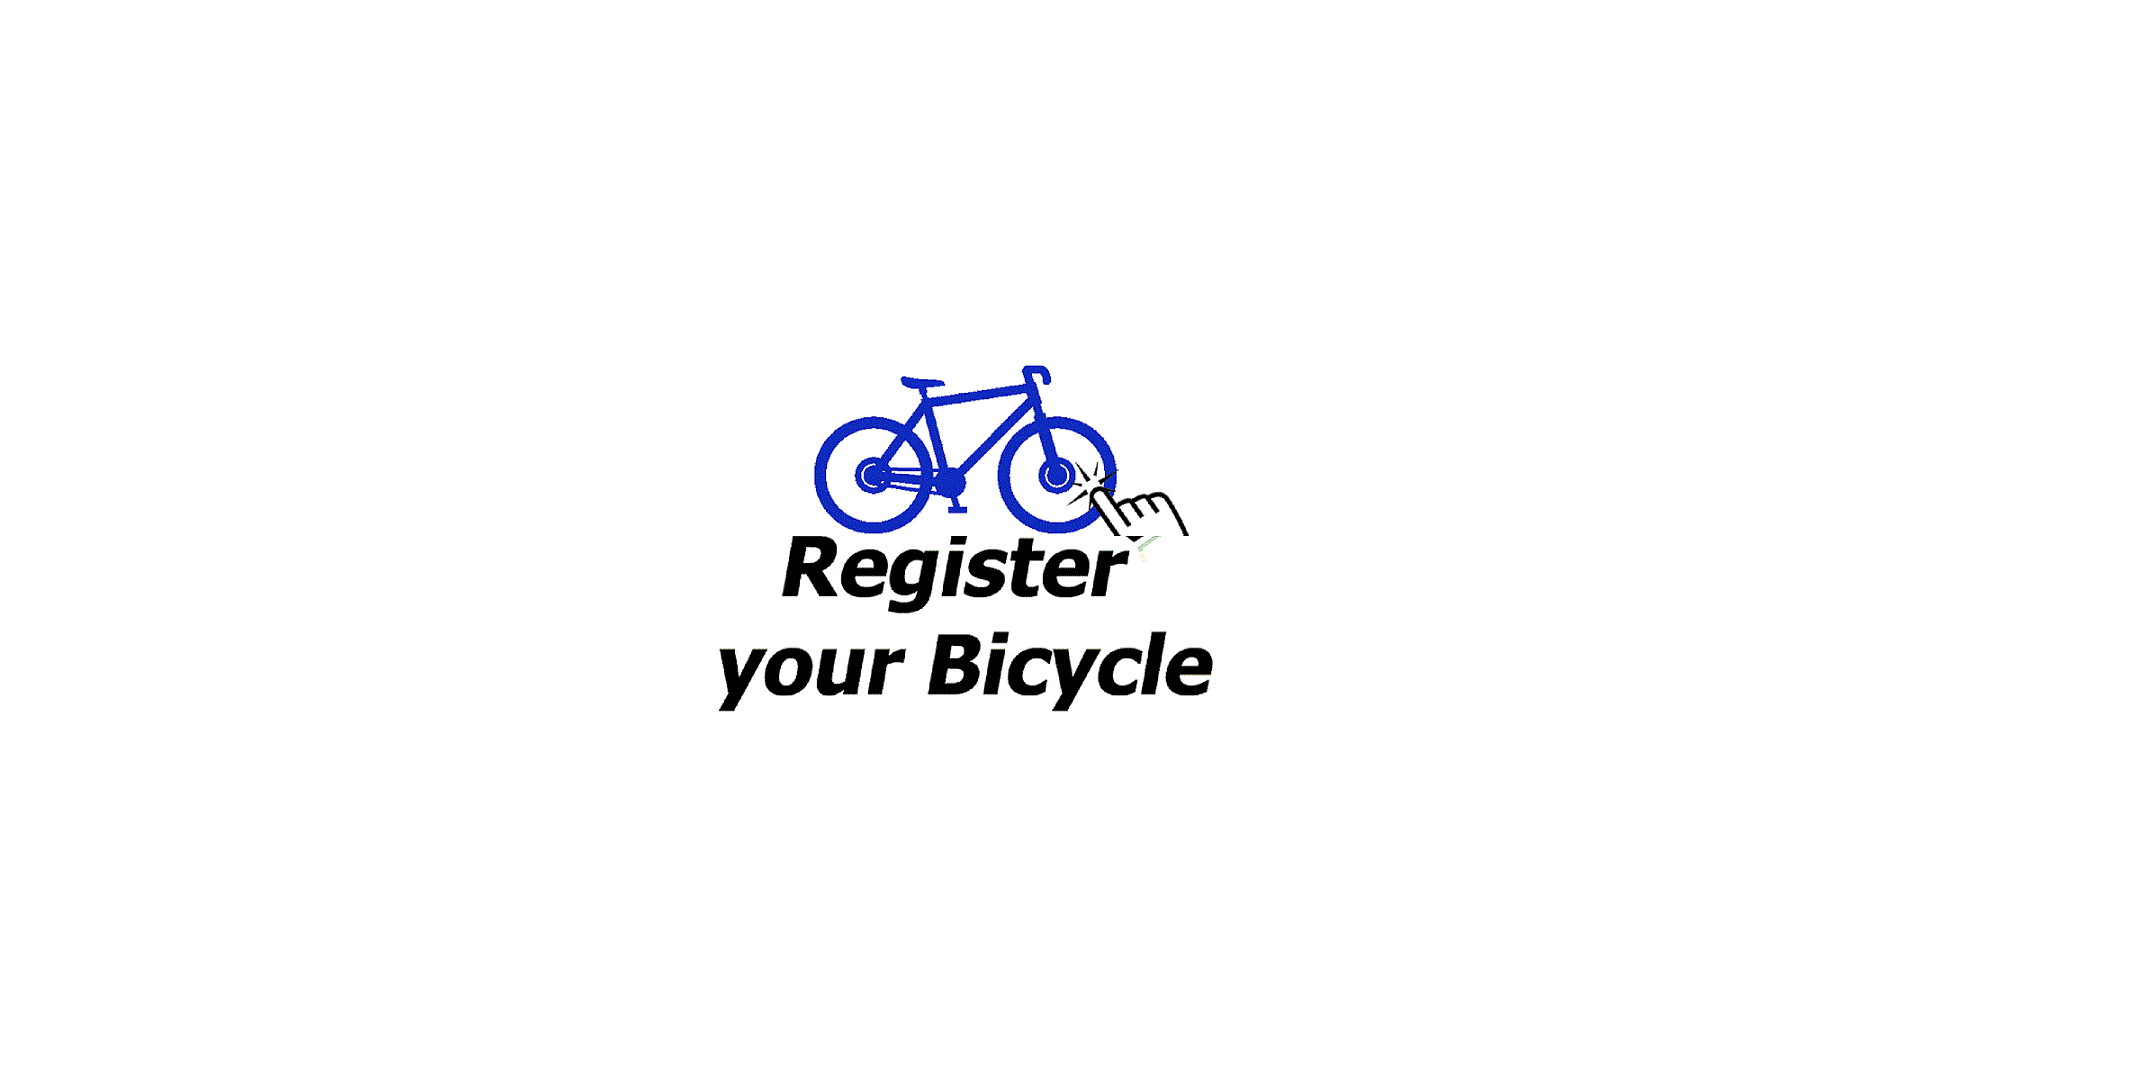 Bicycle Registration, Warranty, Manuals & more